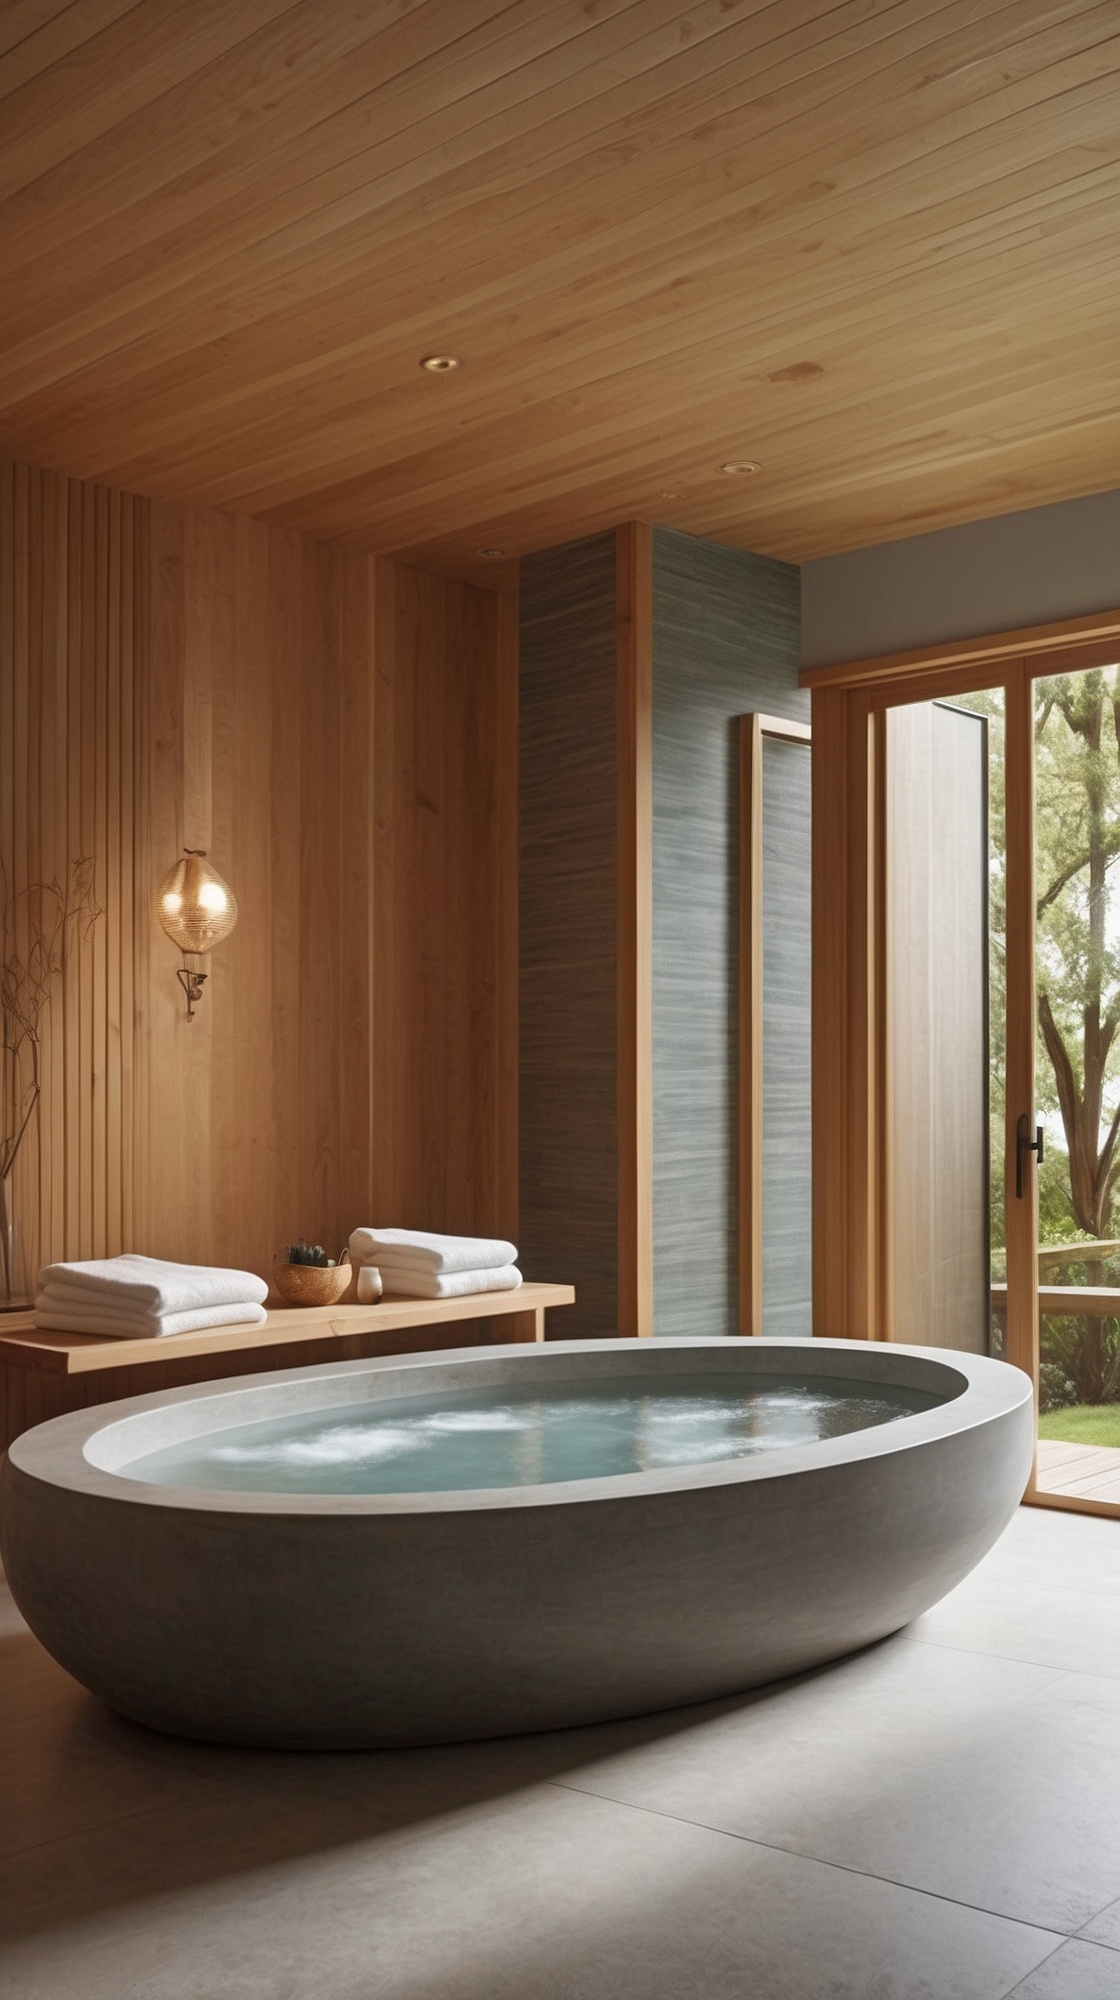 Transform Your Bathroom into a Serene Spa Getaway